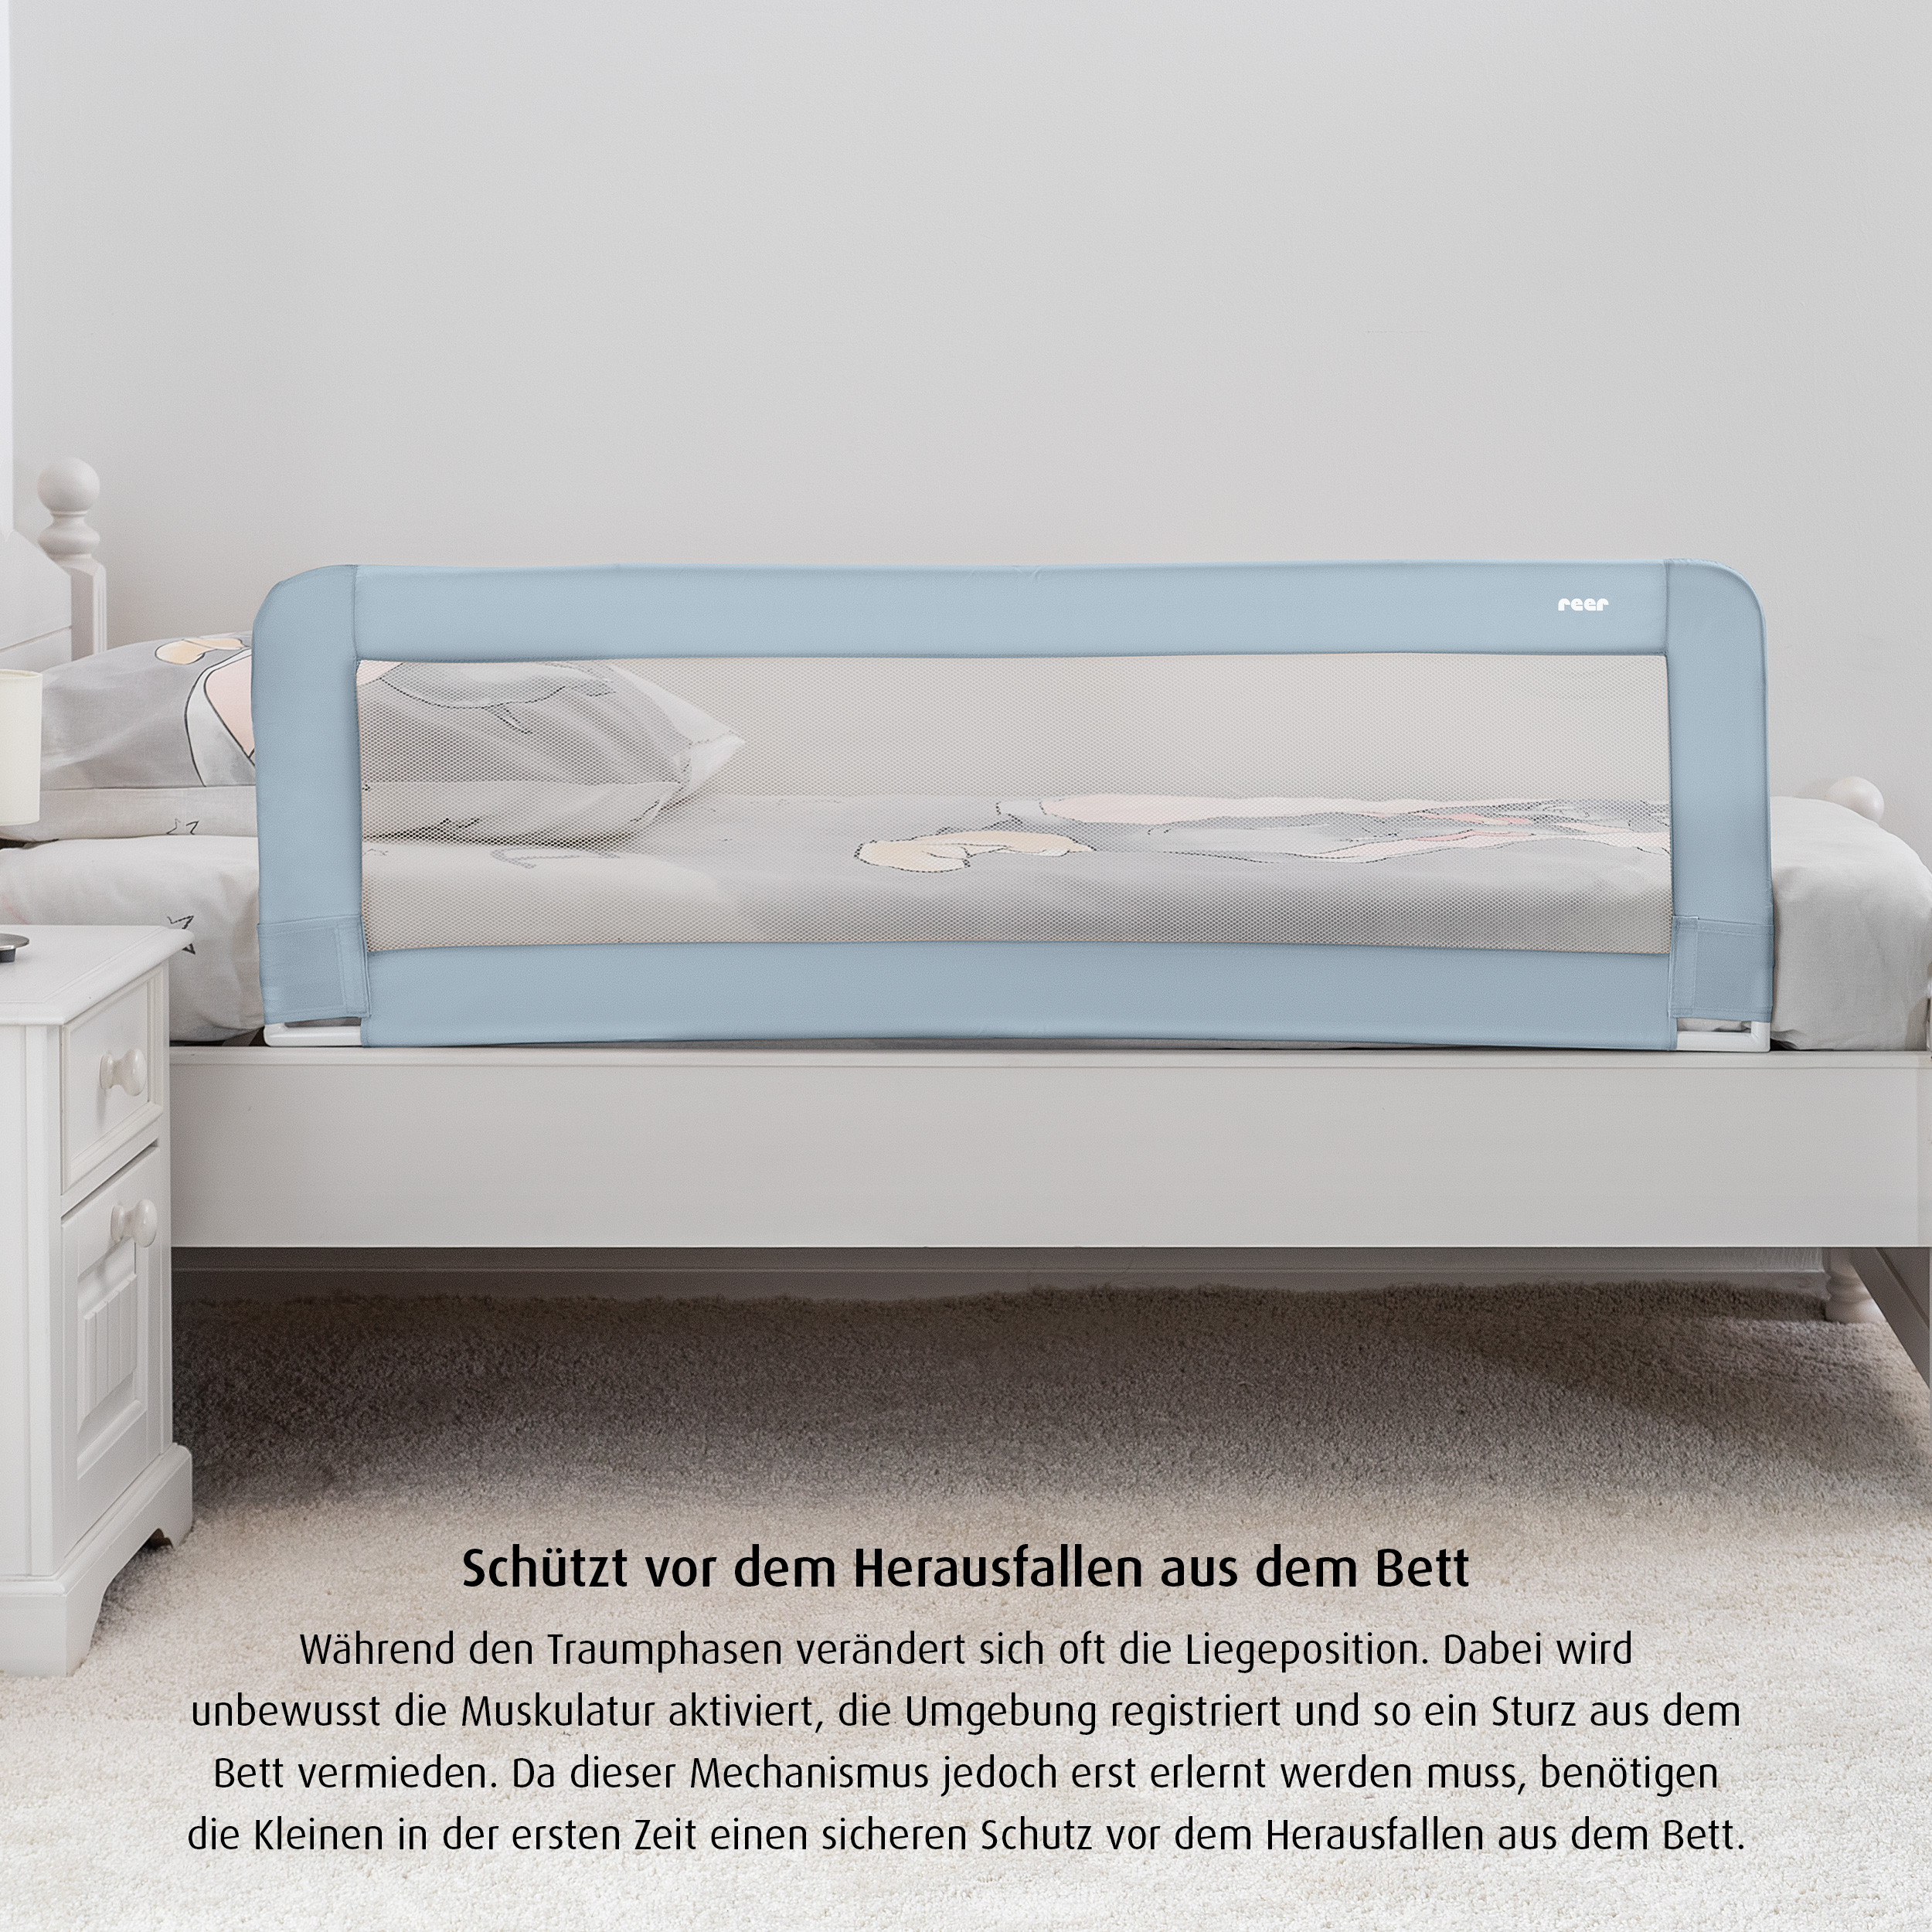 Sleep'n Keep Bettgitter, blaugrau, 150 cm - 210 cm